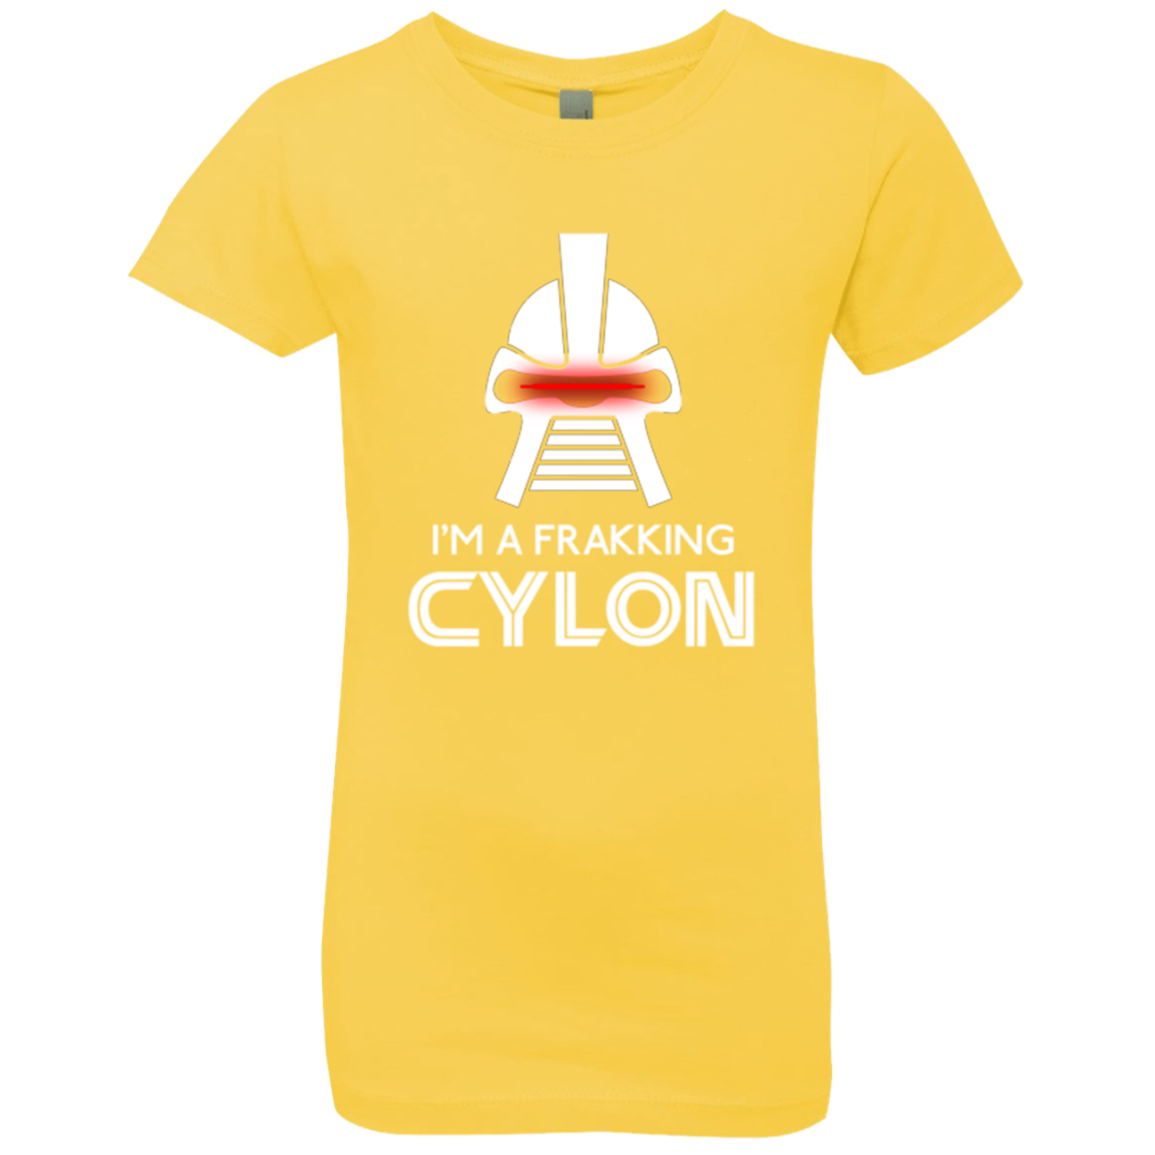 Frakking cylon Girls Premium T-Shirt